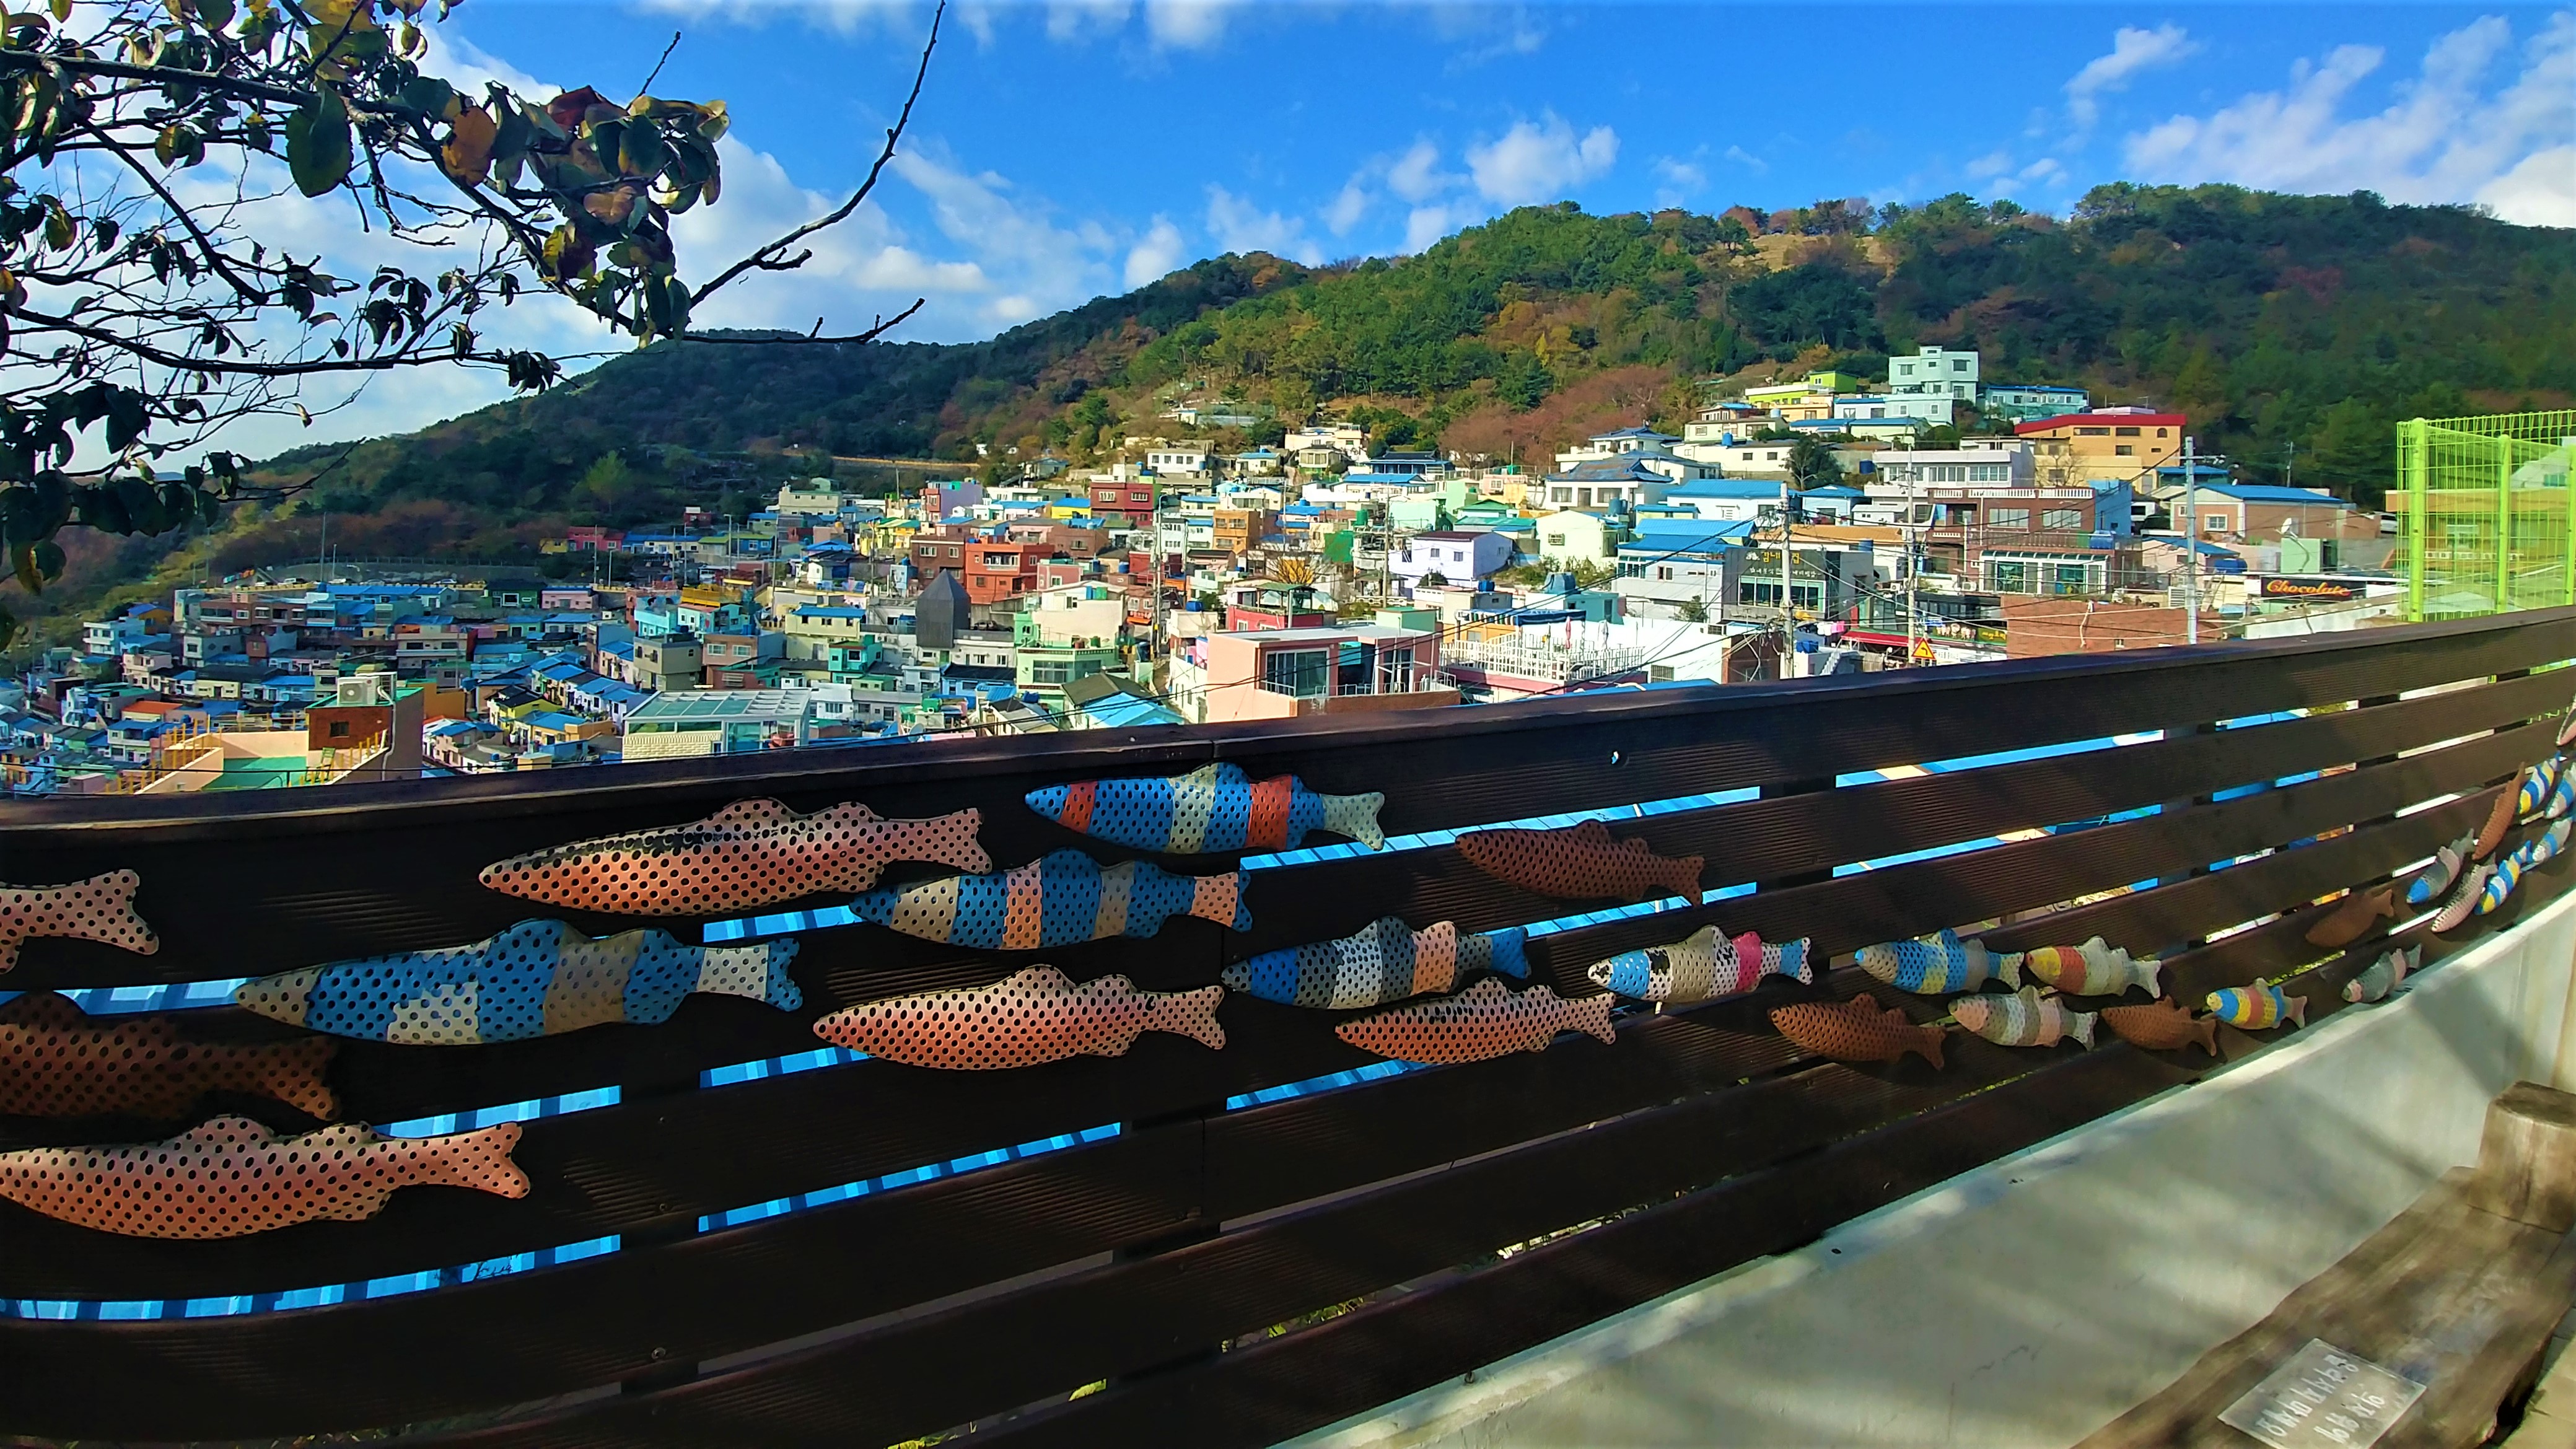 gamcheon village culturel que faire street art blog voyage coree du sud asie arpenter le chemin